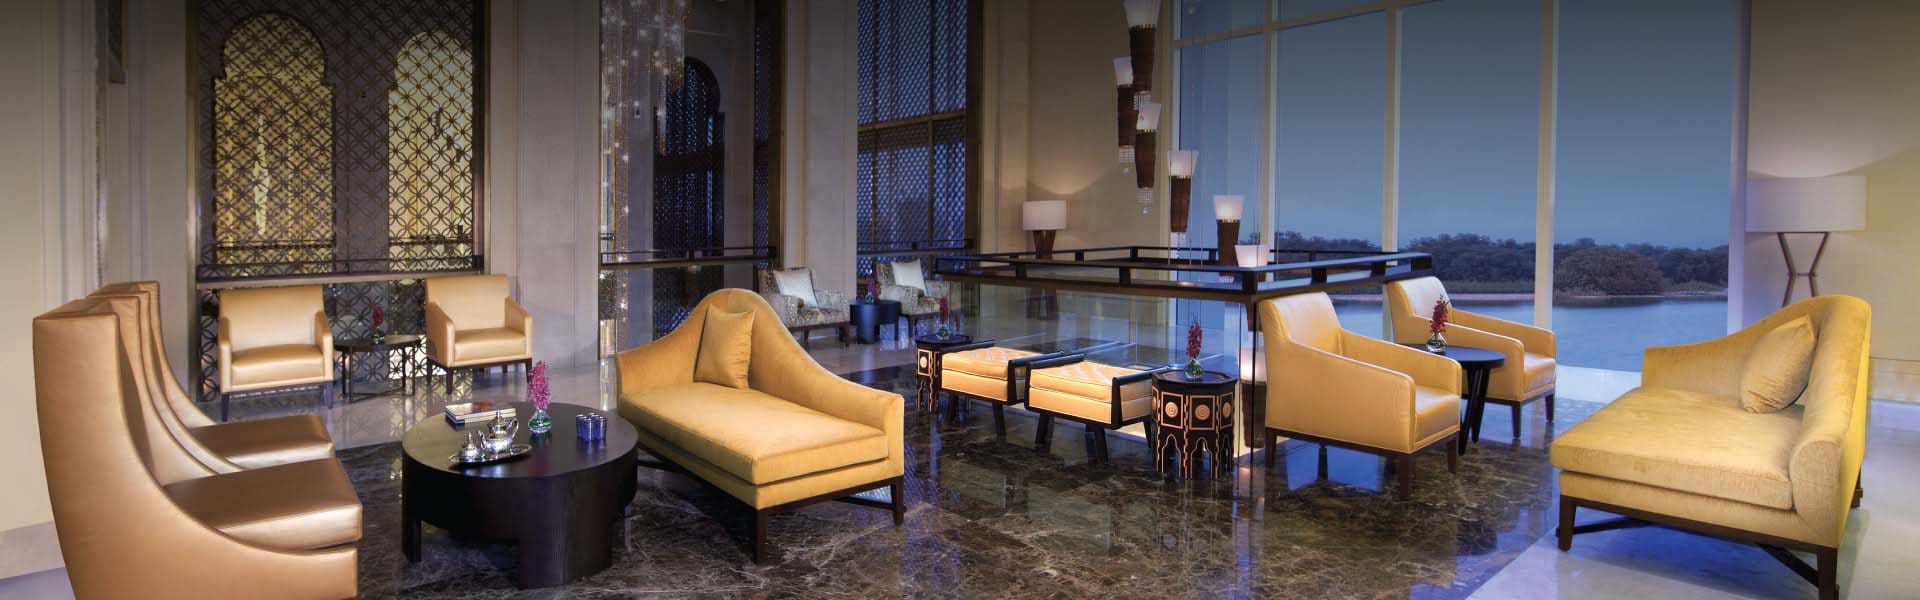 Anantara Eastern Mangroves Abu Dhabi Hotel Executive Club Lounge Seating Area